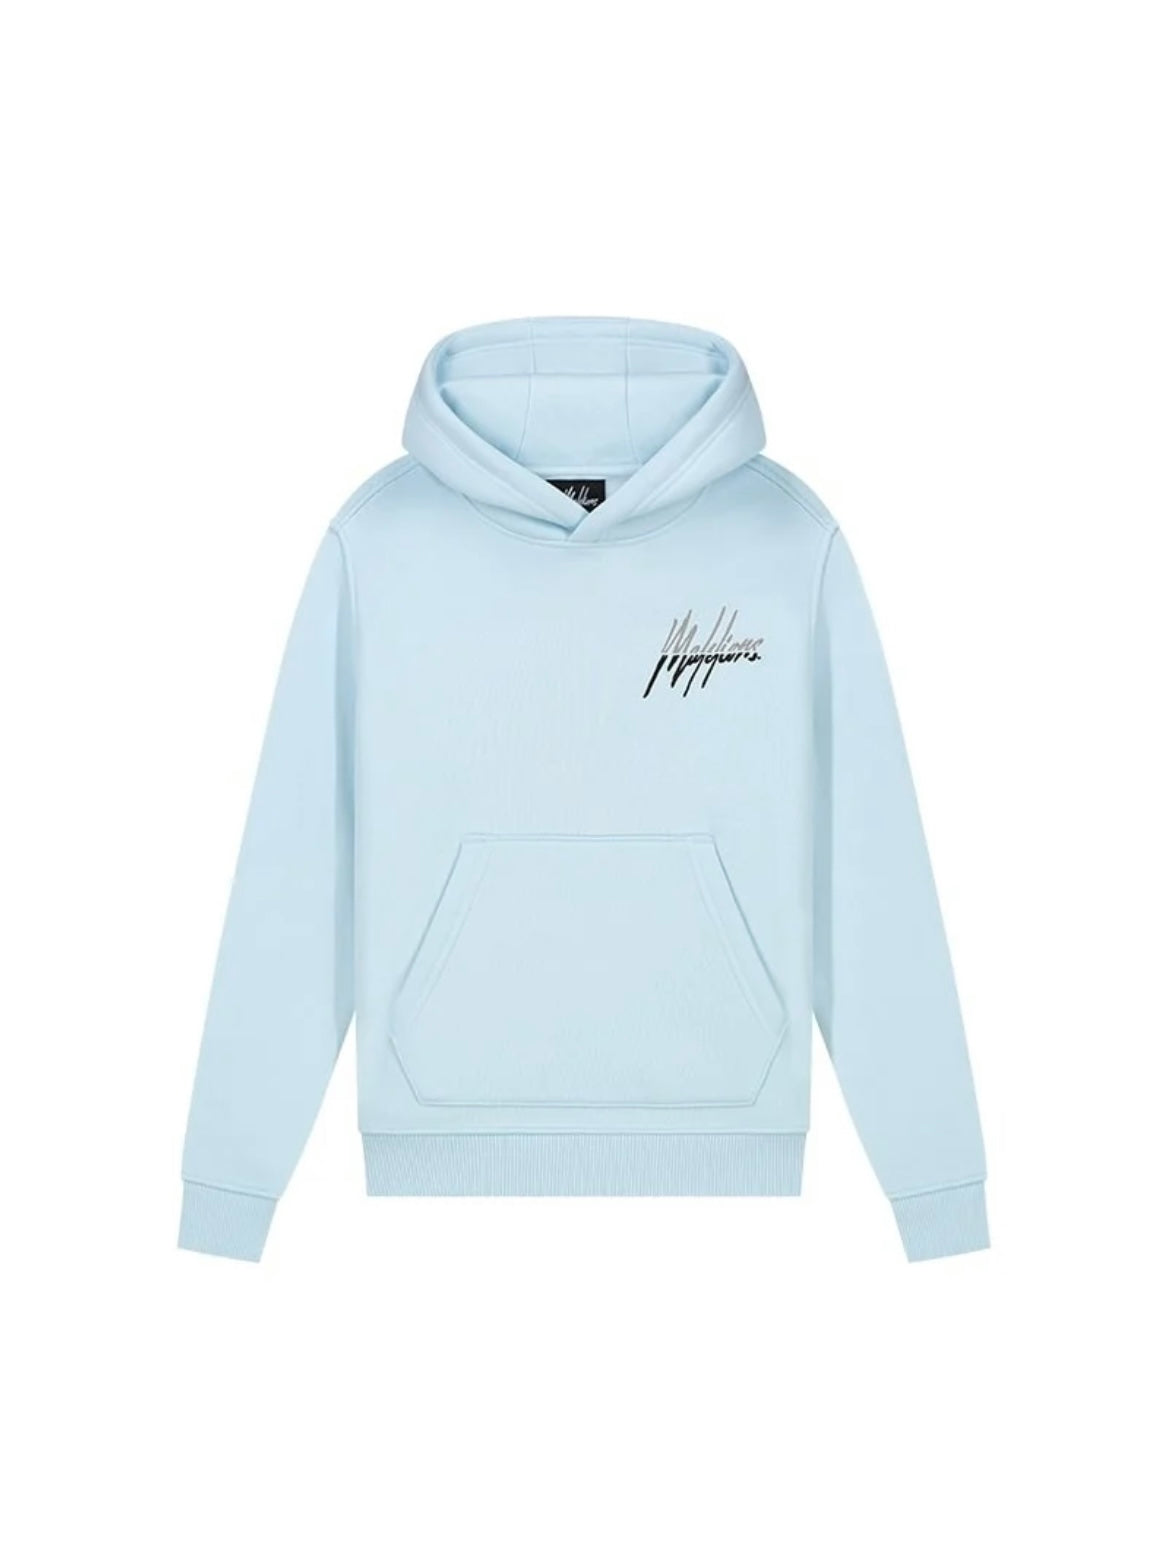 Malelions junior split hoodie - light blue/grey